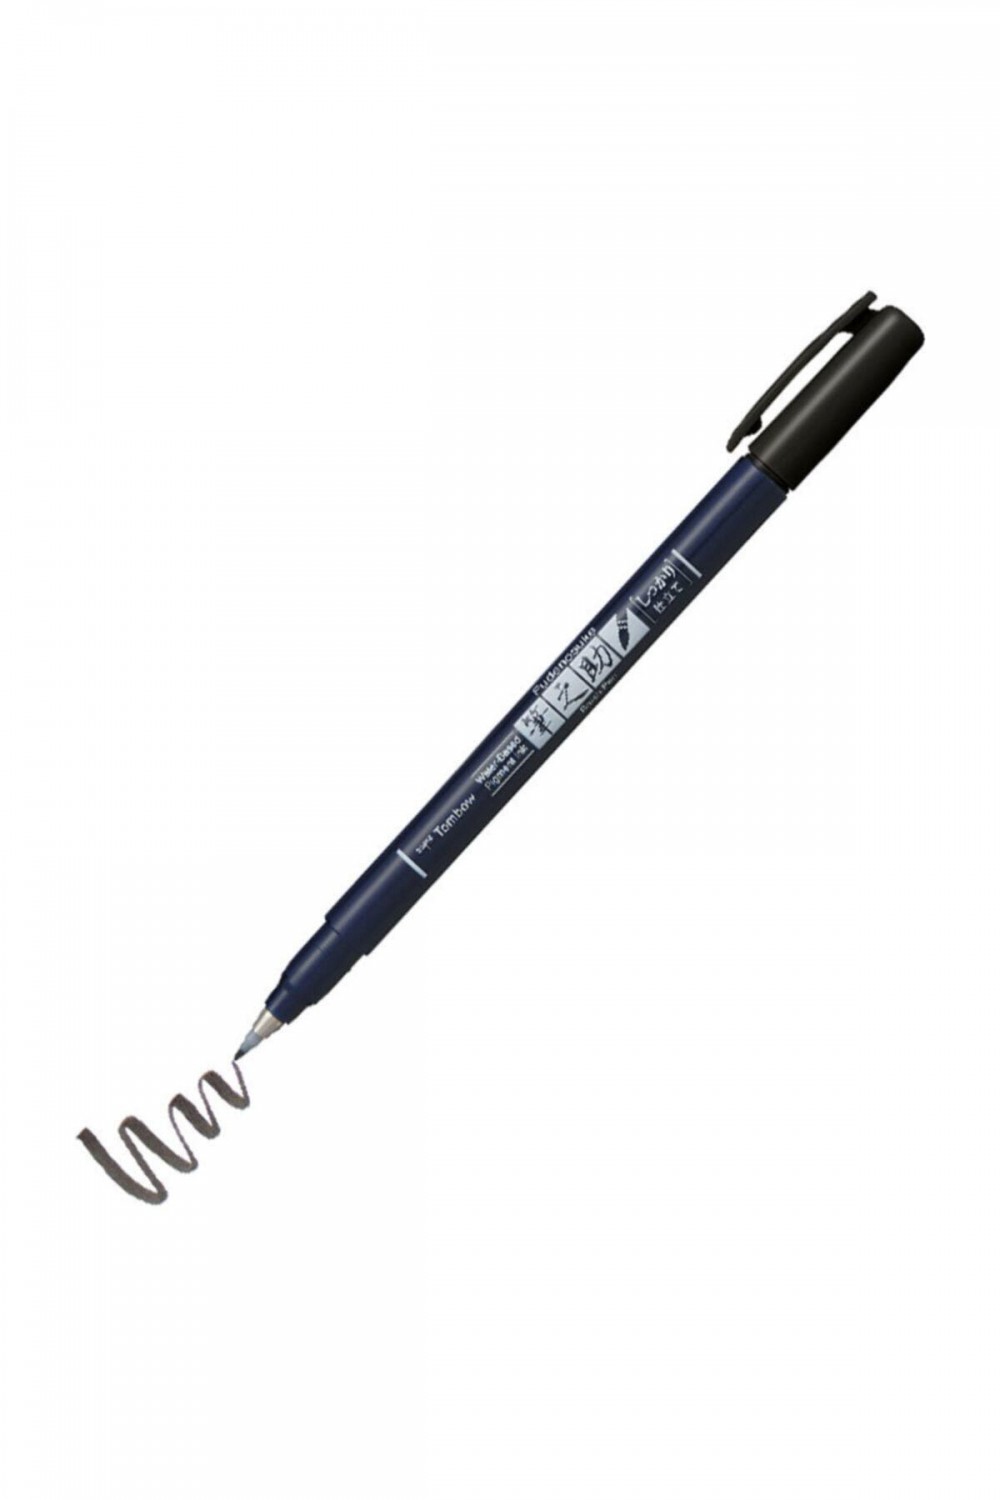 Tombow Fudenosuke Brush Pen Fırça Uçlu Kalem Sert Uç - Siyah